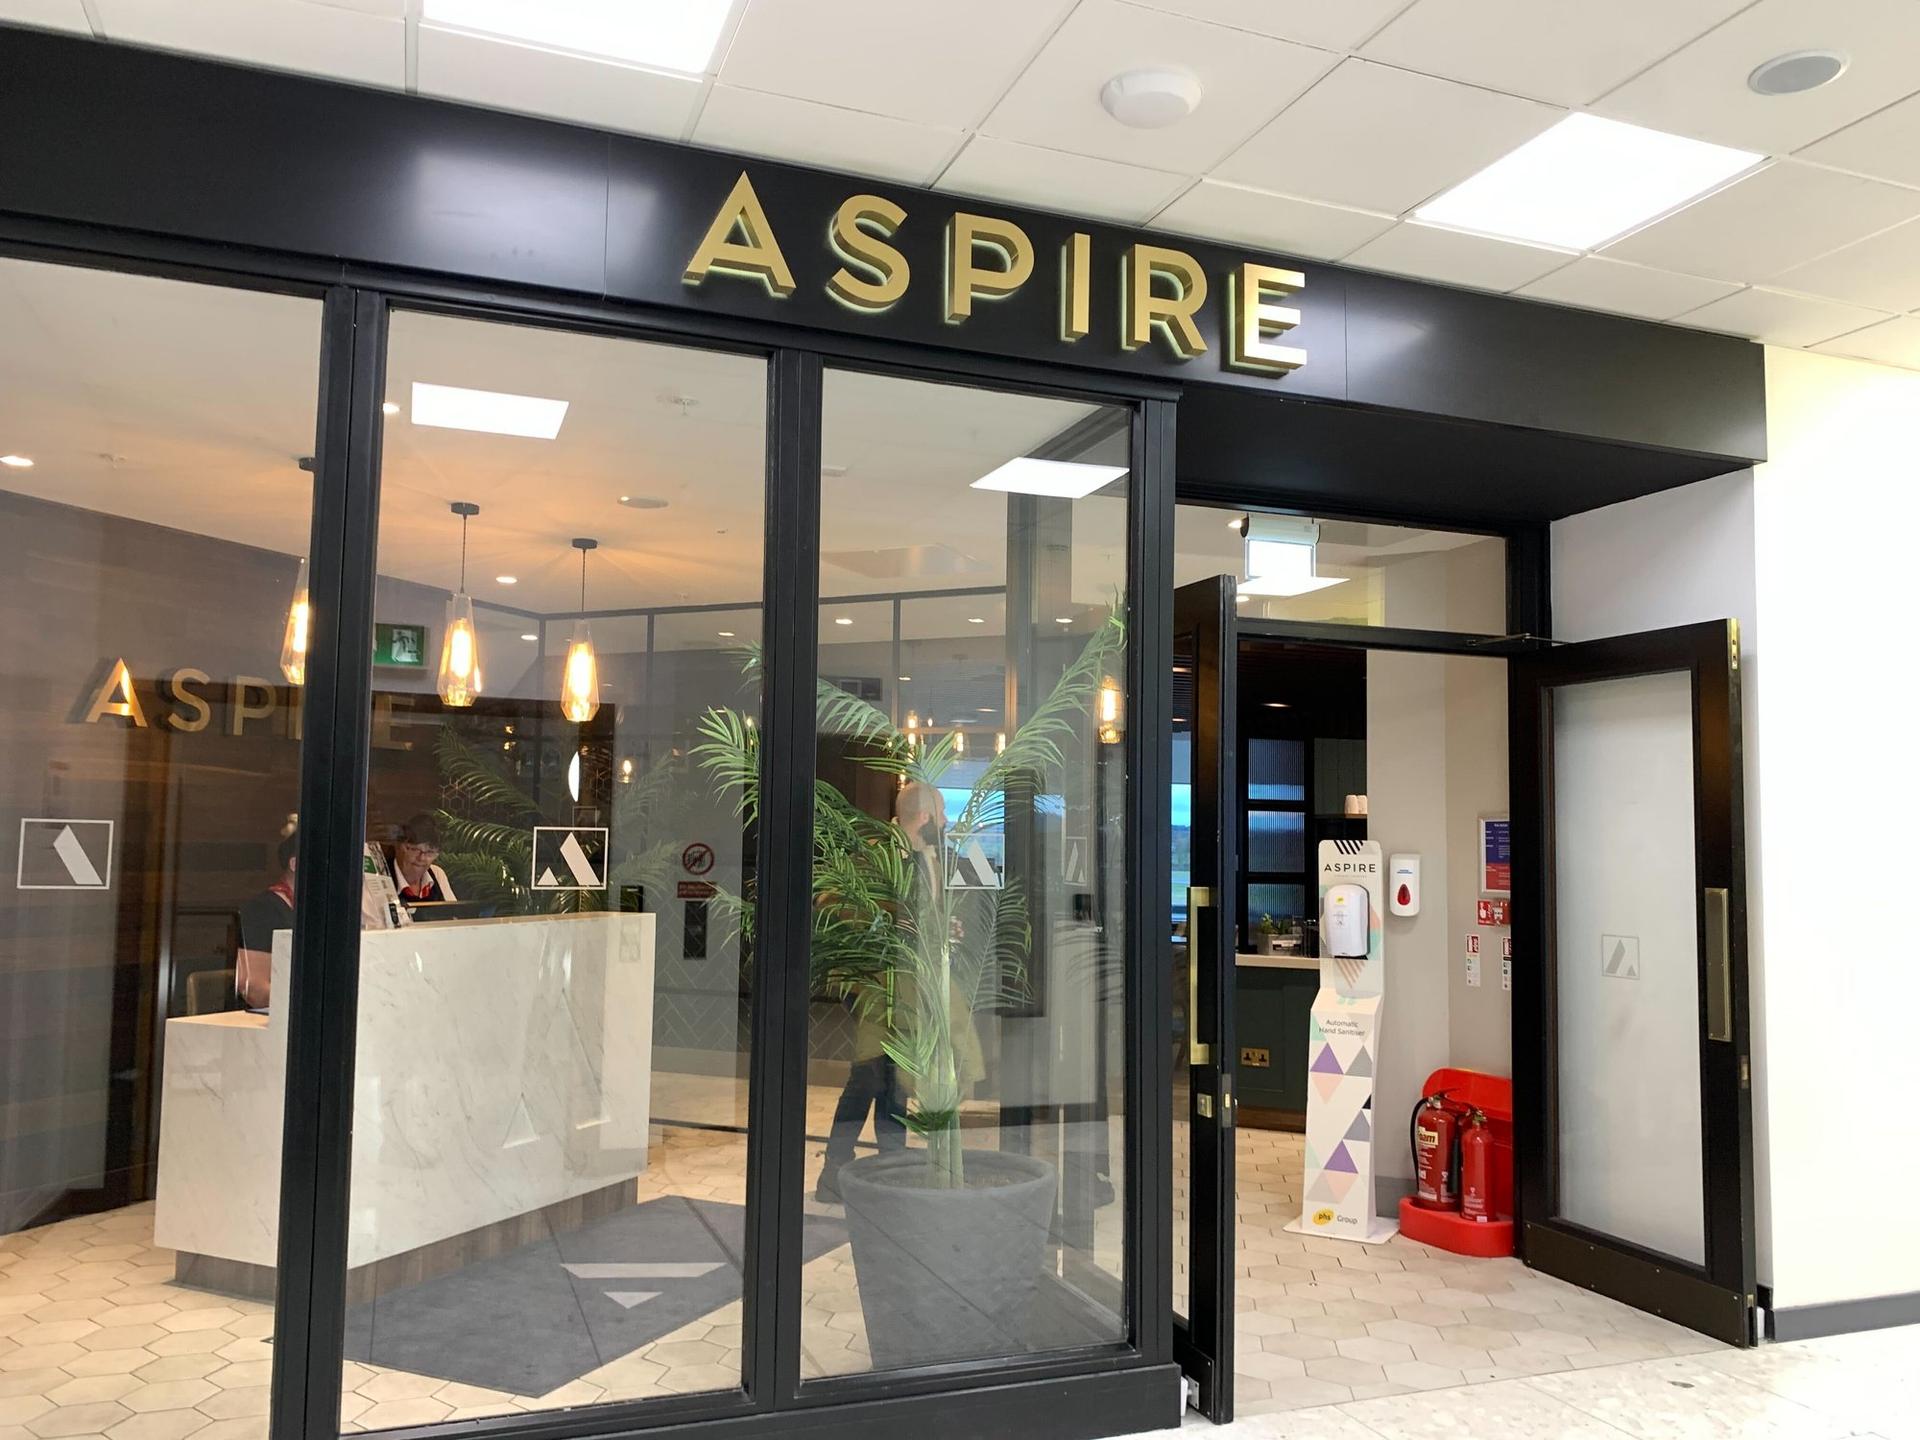 Aspire Lounge (Gate 16) image 1 of 1